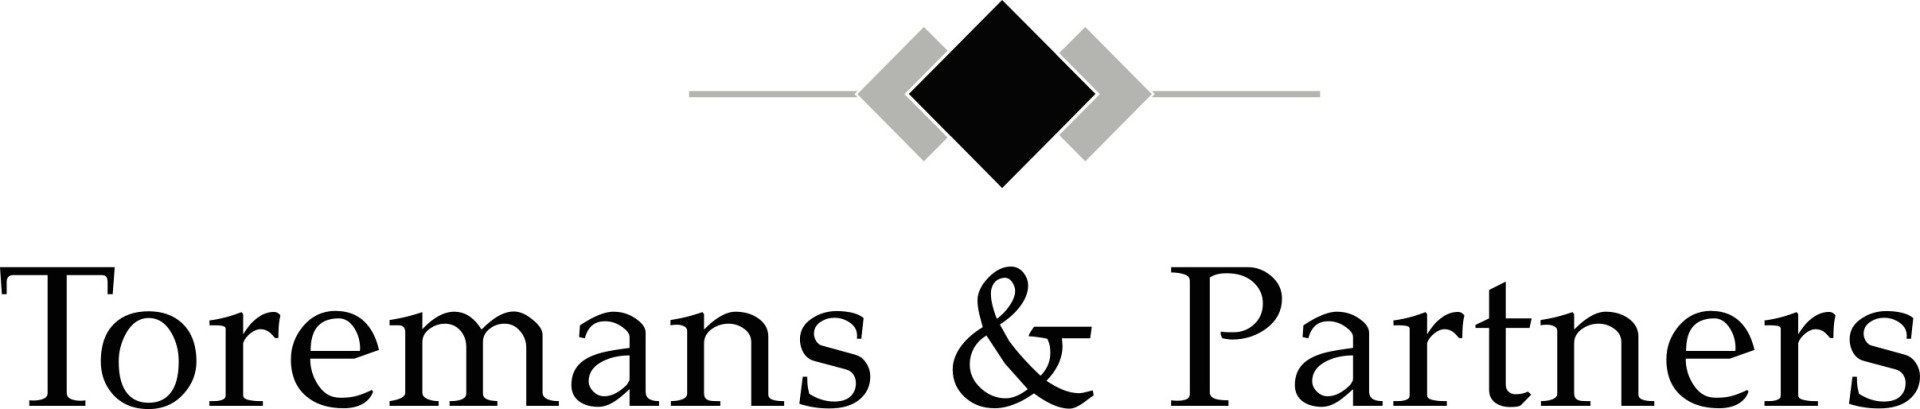 Toremans&Partners_logo